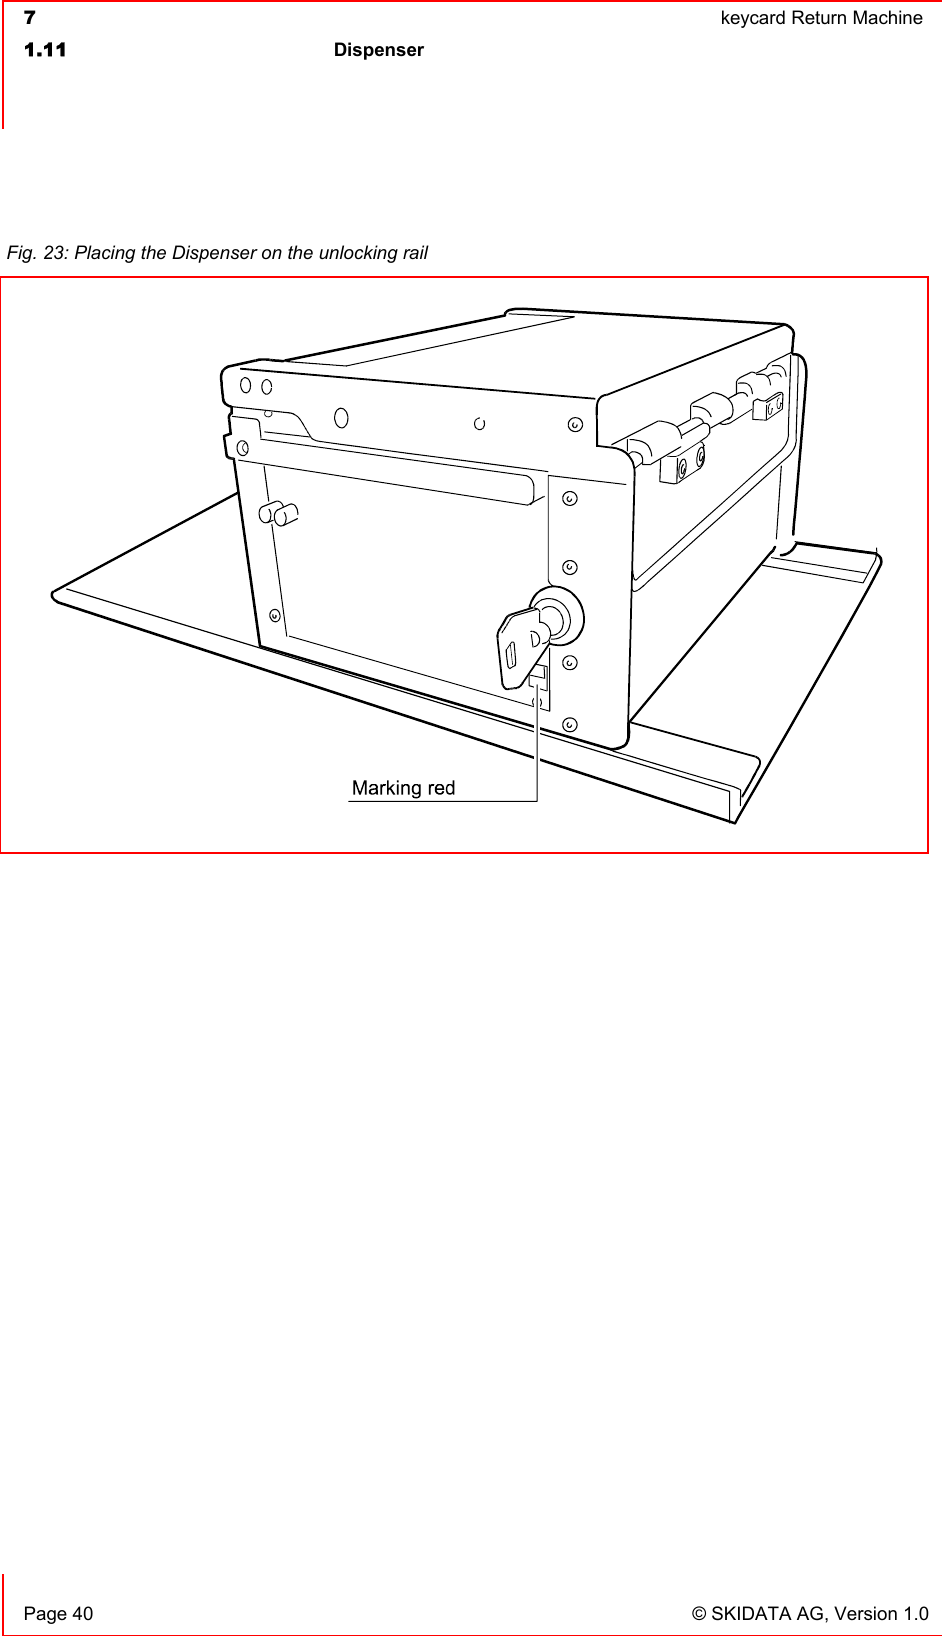  7  keycard Return Machine1.11 Dispenser  Page 40  © SKIDATA AG, Version 1.0 Fig. 23: Placing the Dispenser on the unlocking rail 